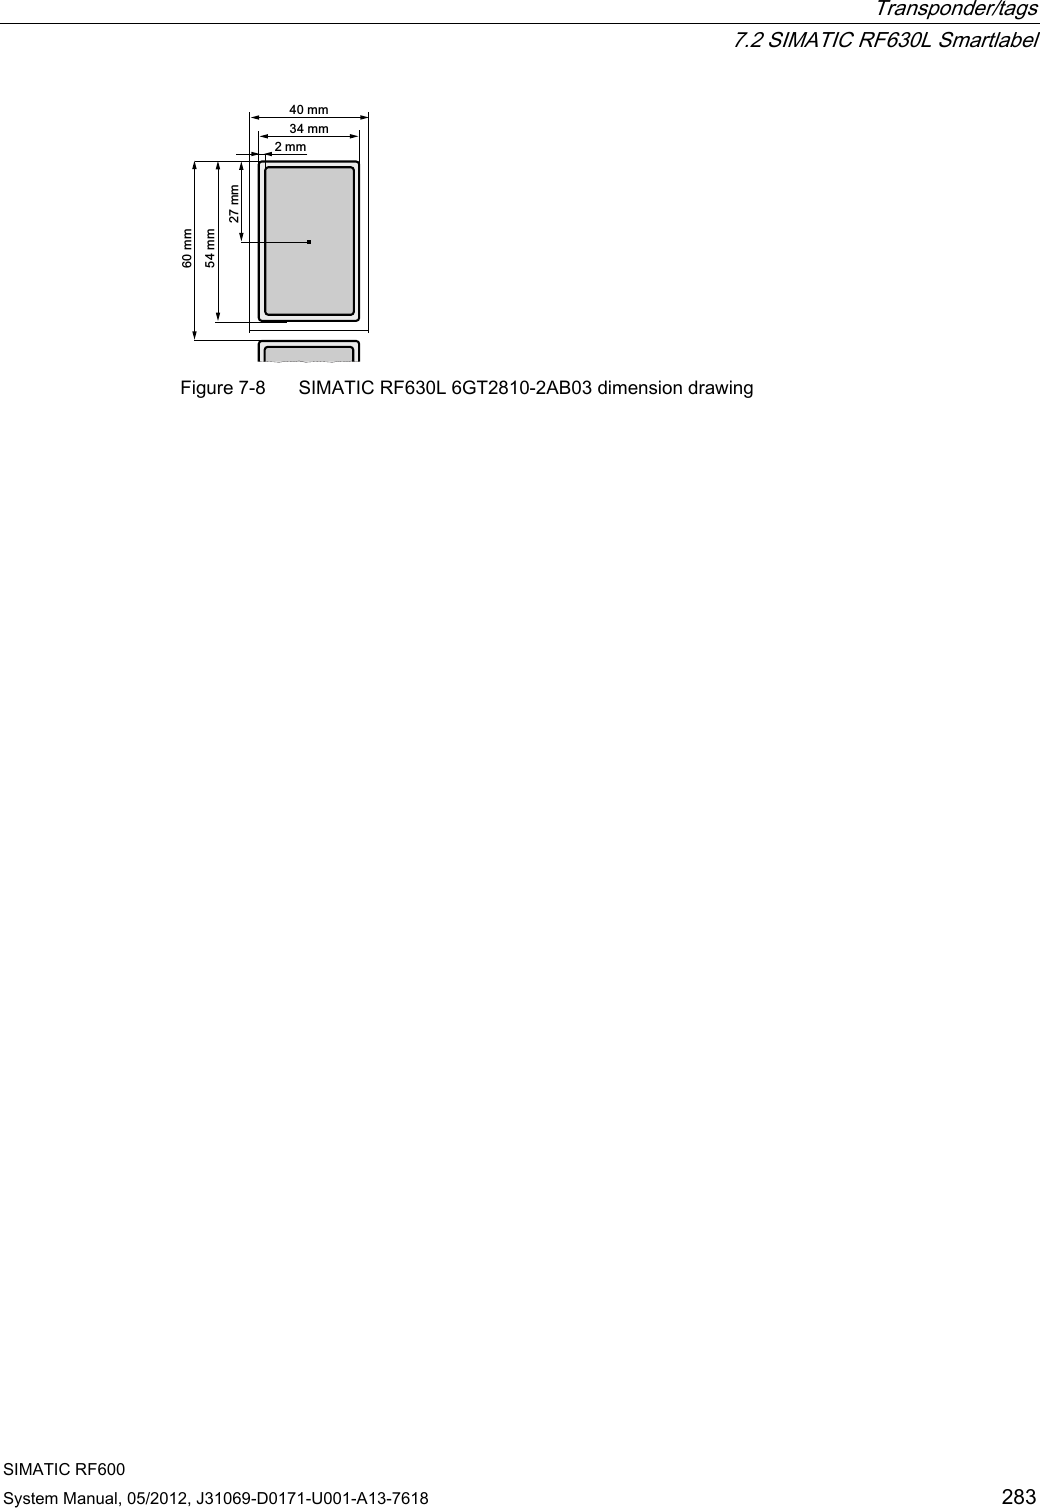  Transponder/tags  7.2 SIMATIC RF630L Smartlabel SIMATIC RF600 System Manual, 05/2012, J31069-D0171-U001-A13-7618  283 PPPPPPPPPPPP Figure 7-8  SIMATIC RF630L 6GT2810-2AB03 dimension drawing 